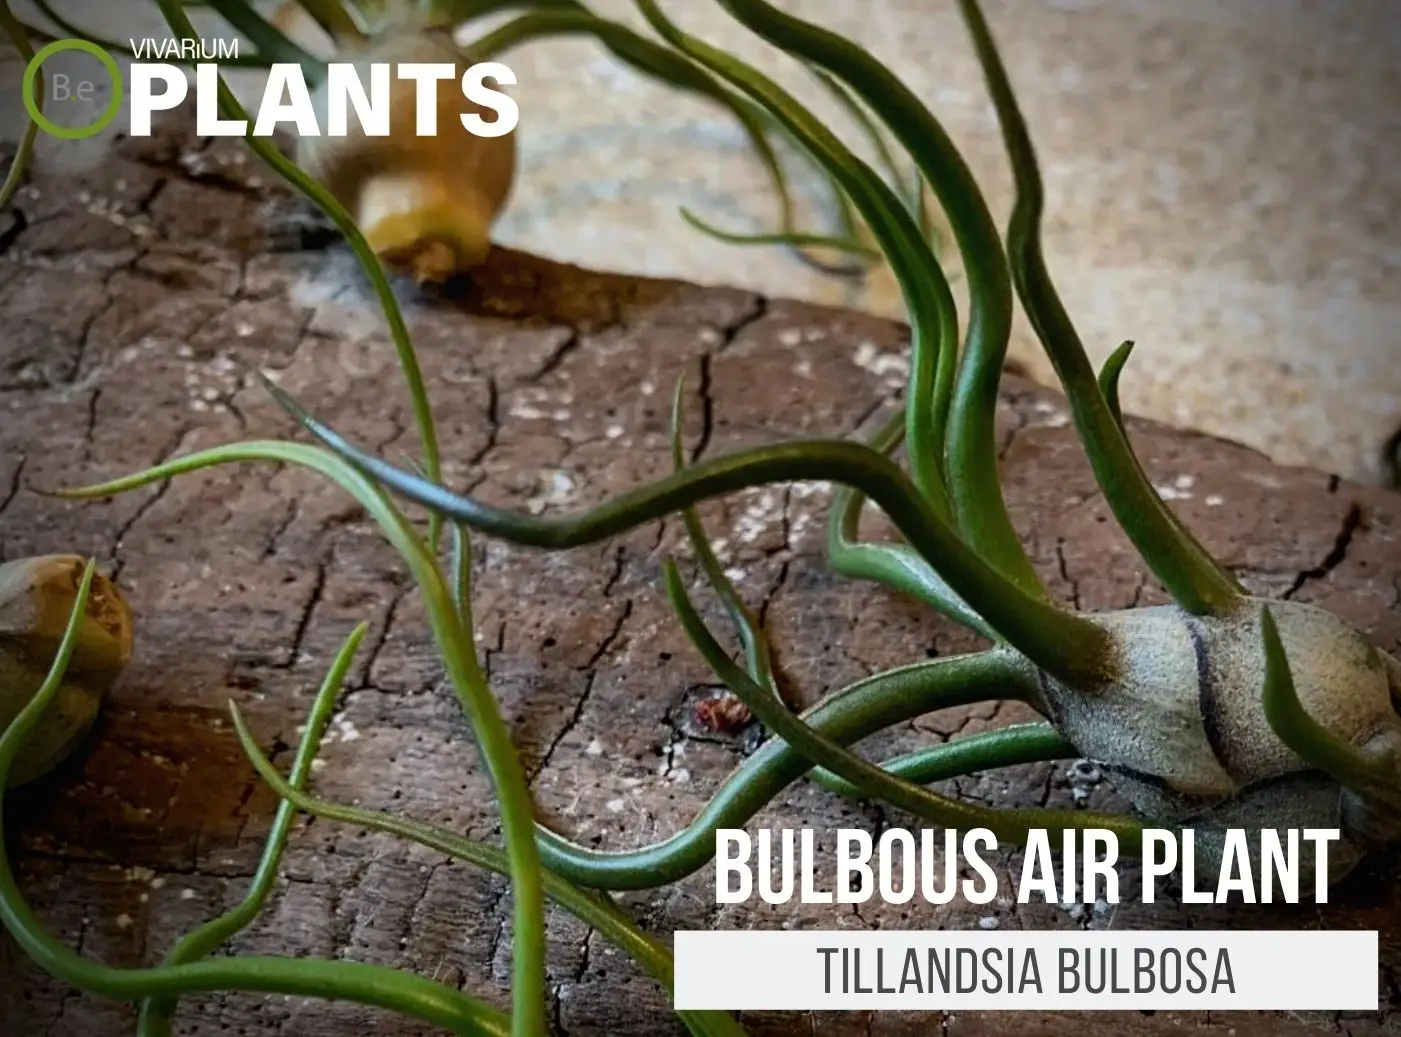 Tillandsia bulbosa "Bulbous Air Plant" Care Guide